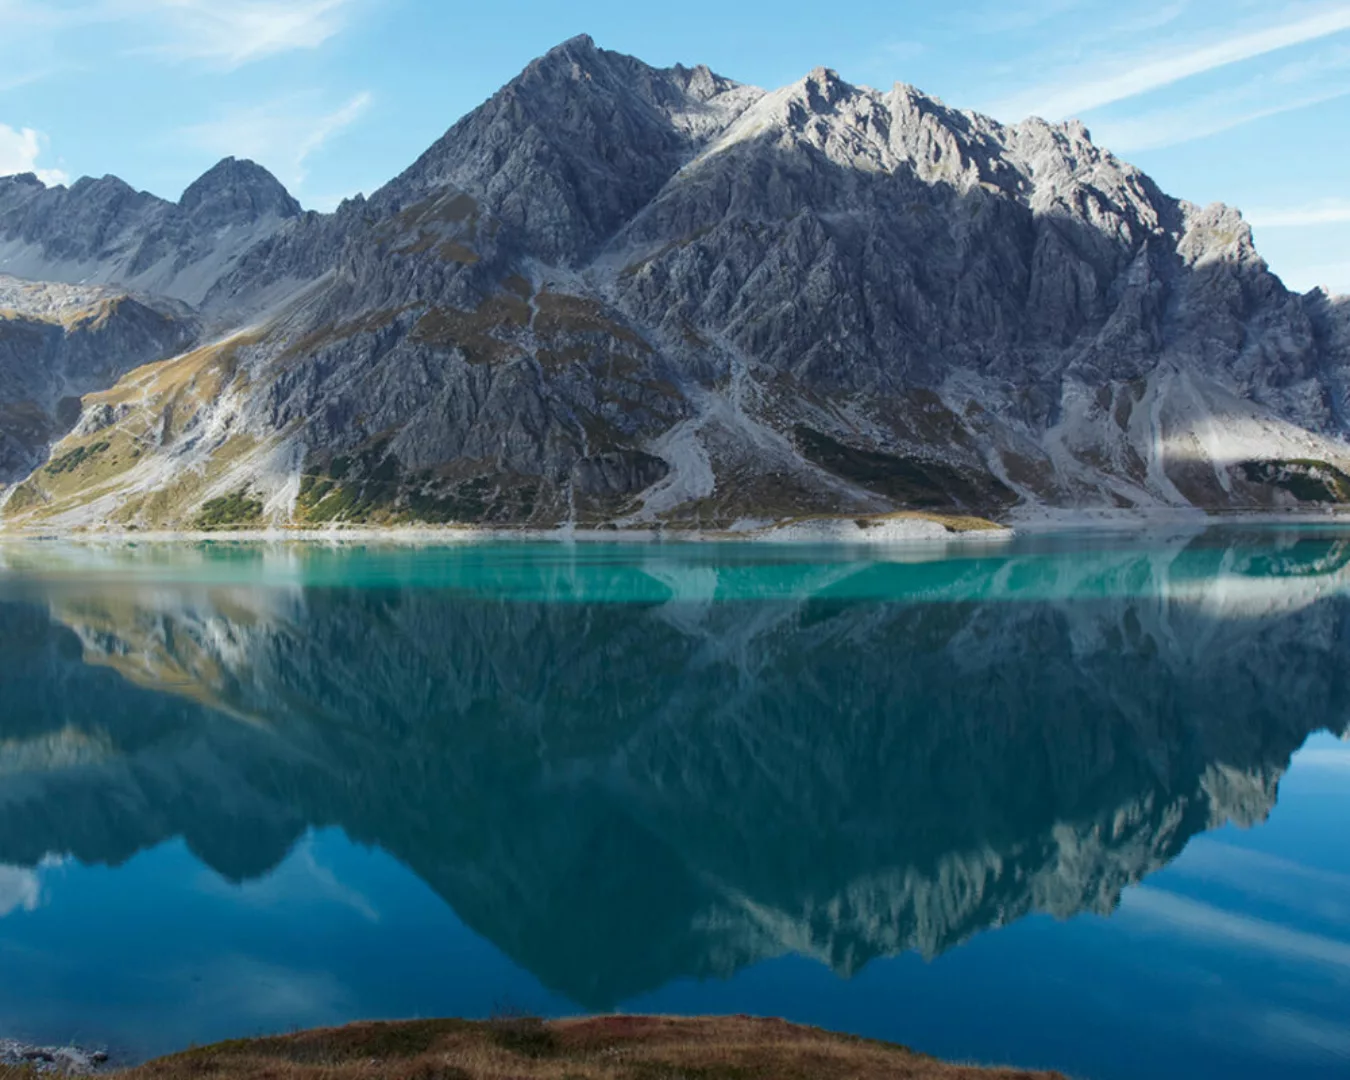 Fototapete "Bergsee klar" 4,00x2,50 m / Glattvlies Perlmutt günstig online kaufen